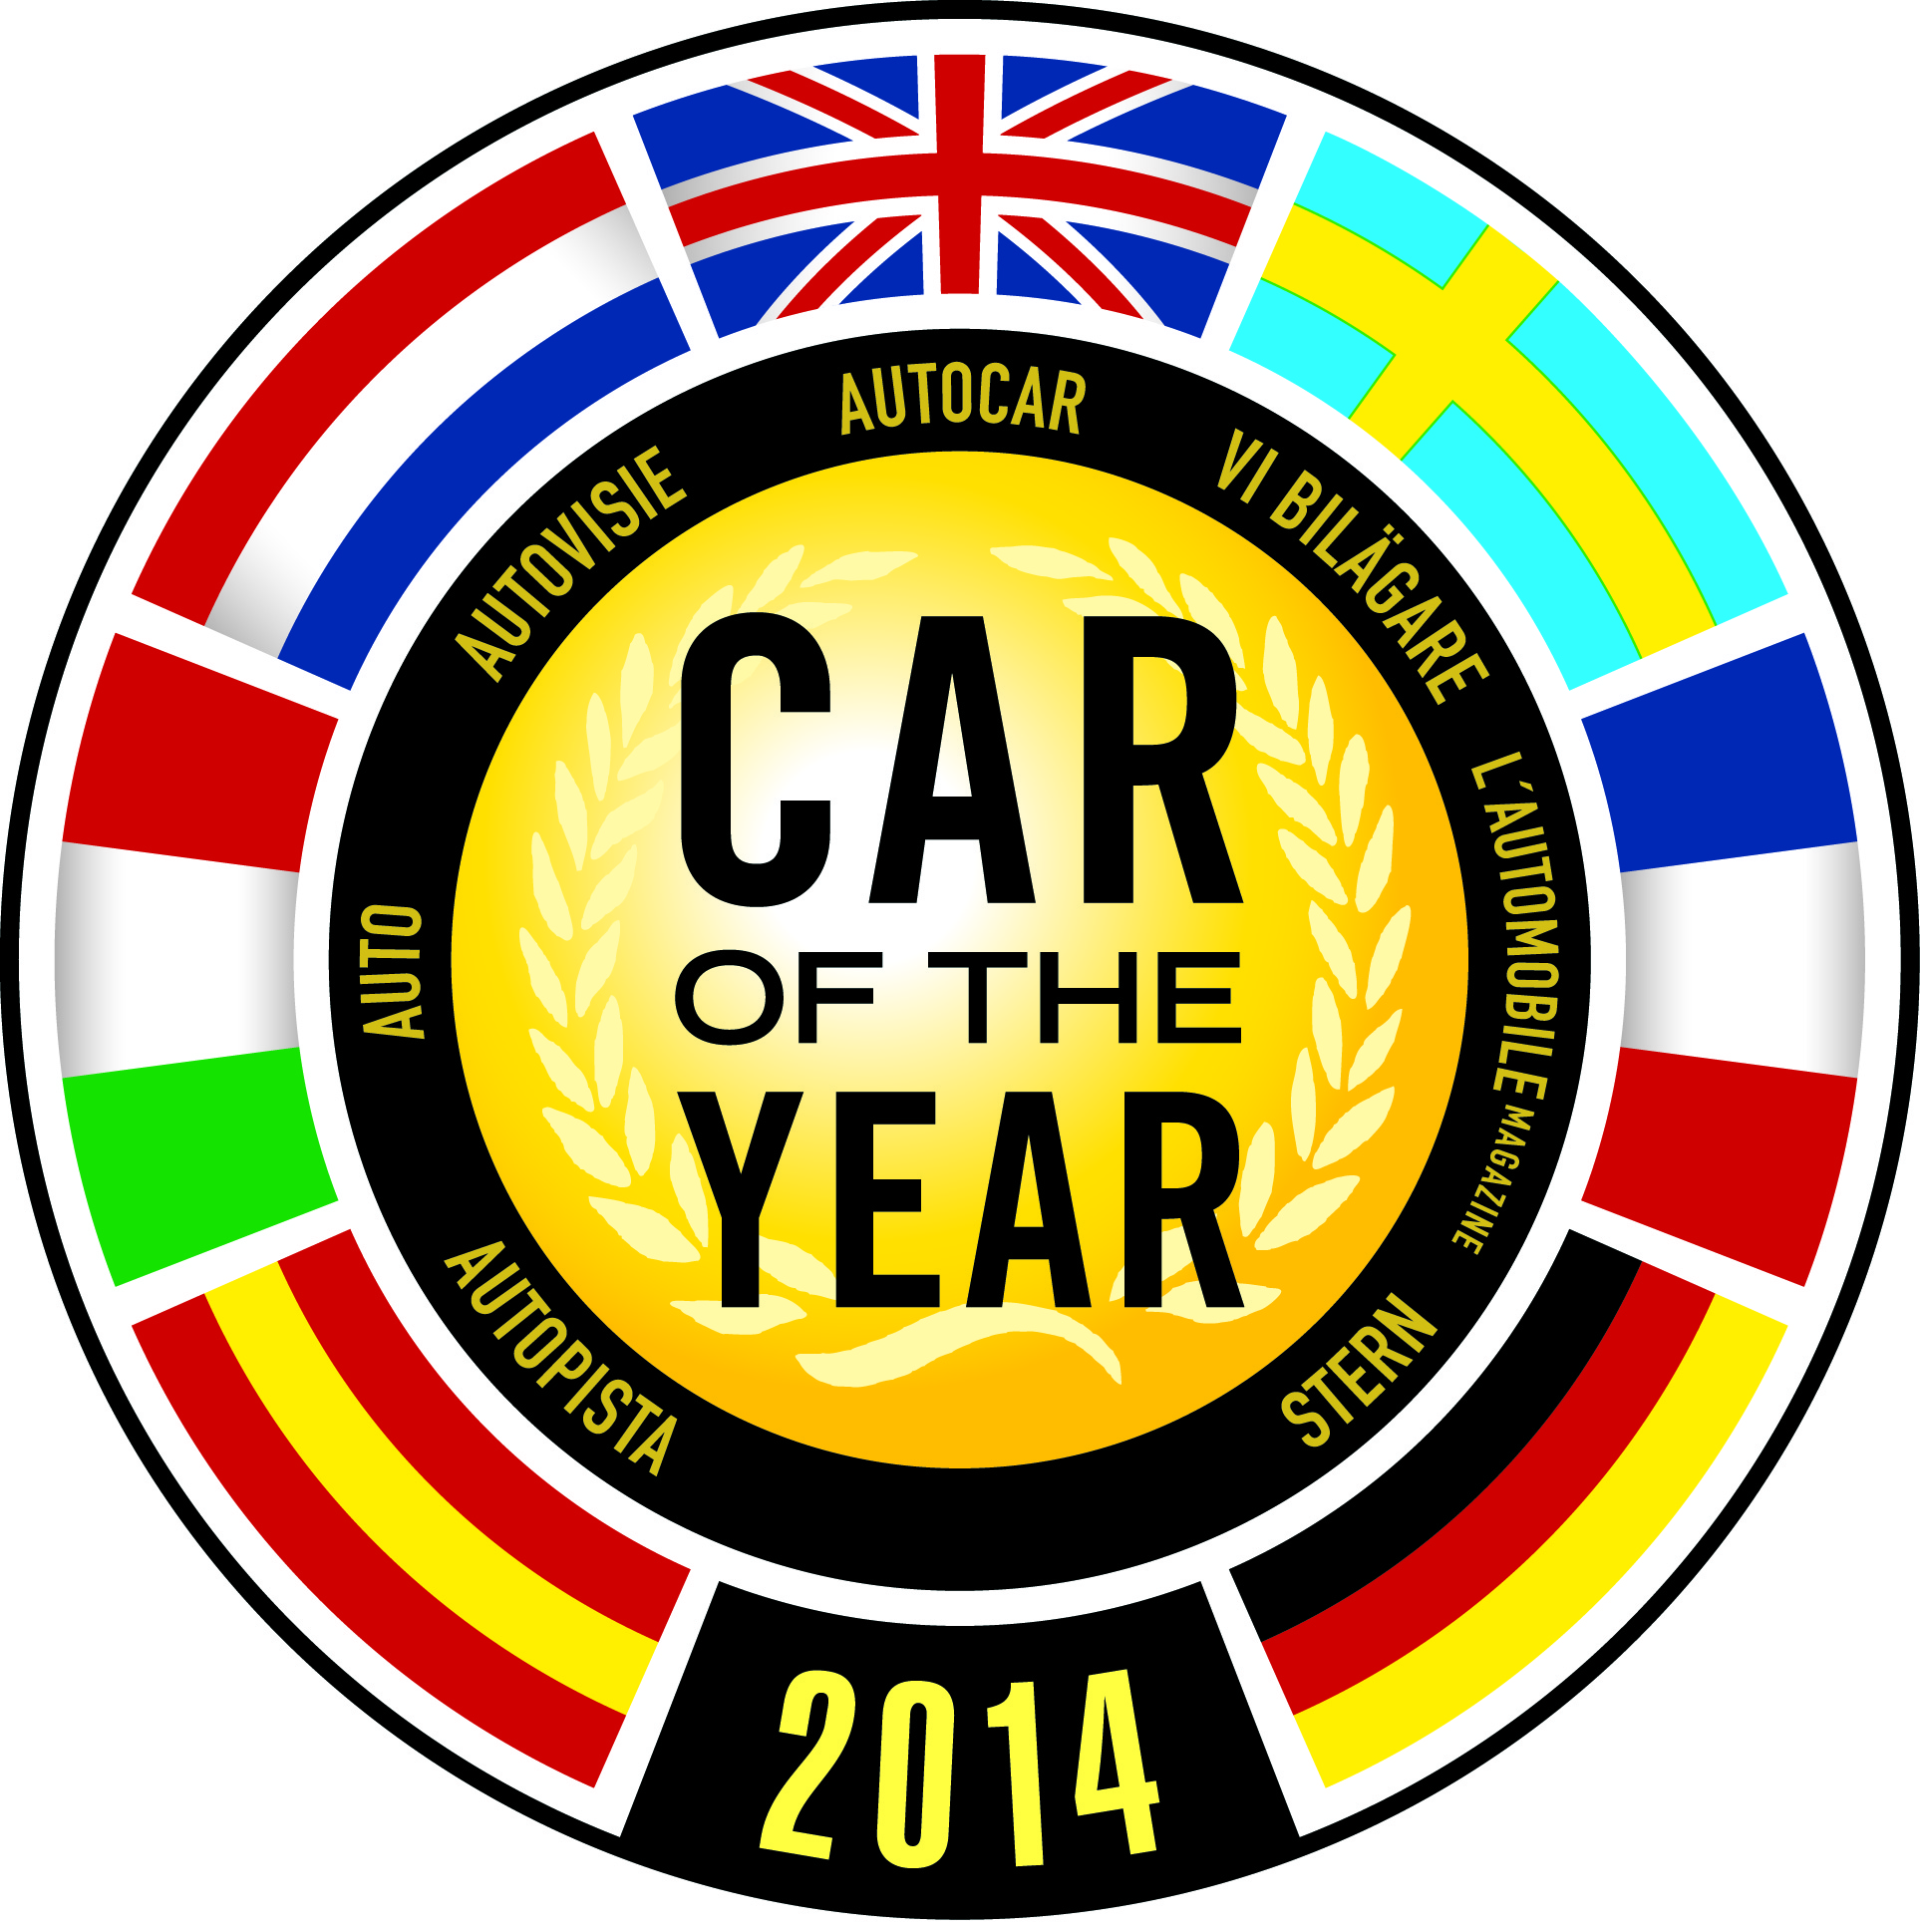 The Scott Jones Ace Parking Super Car of the Year – Koenigsegg